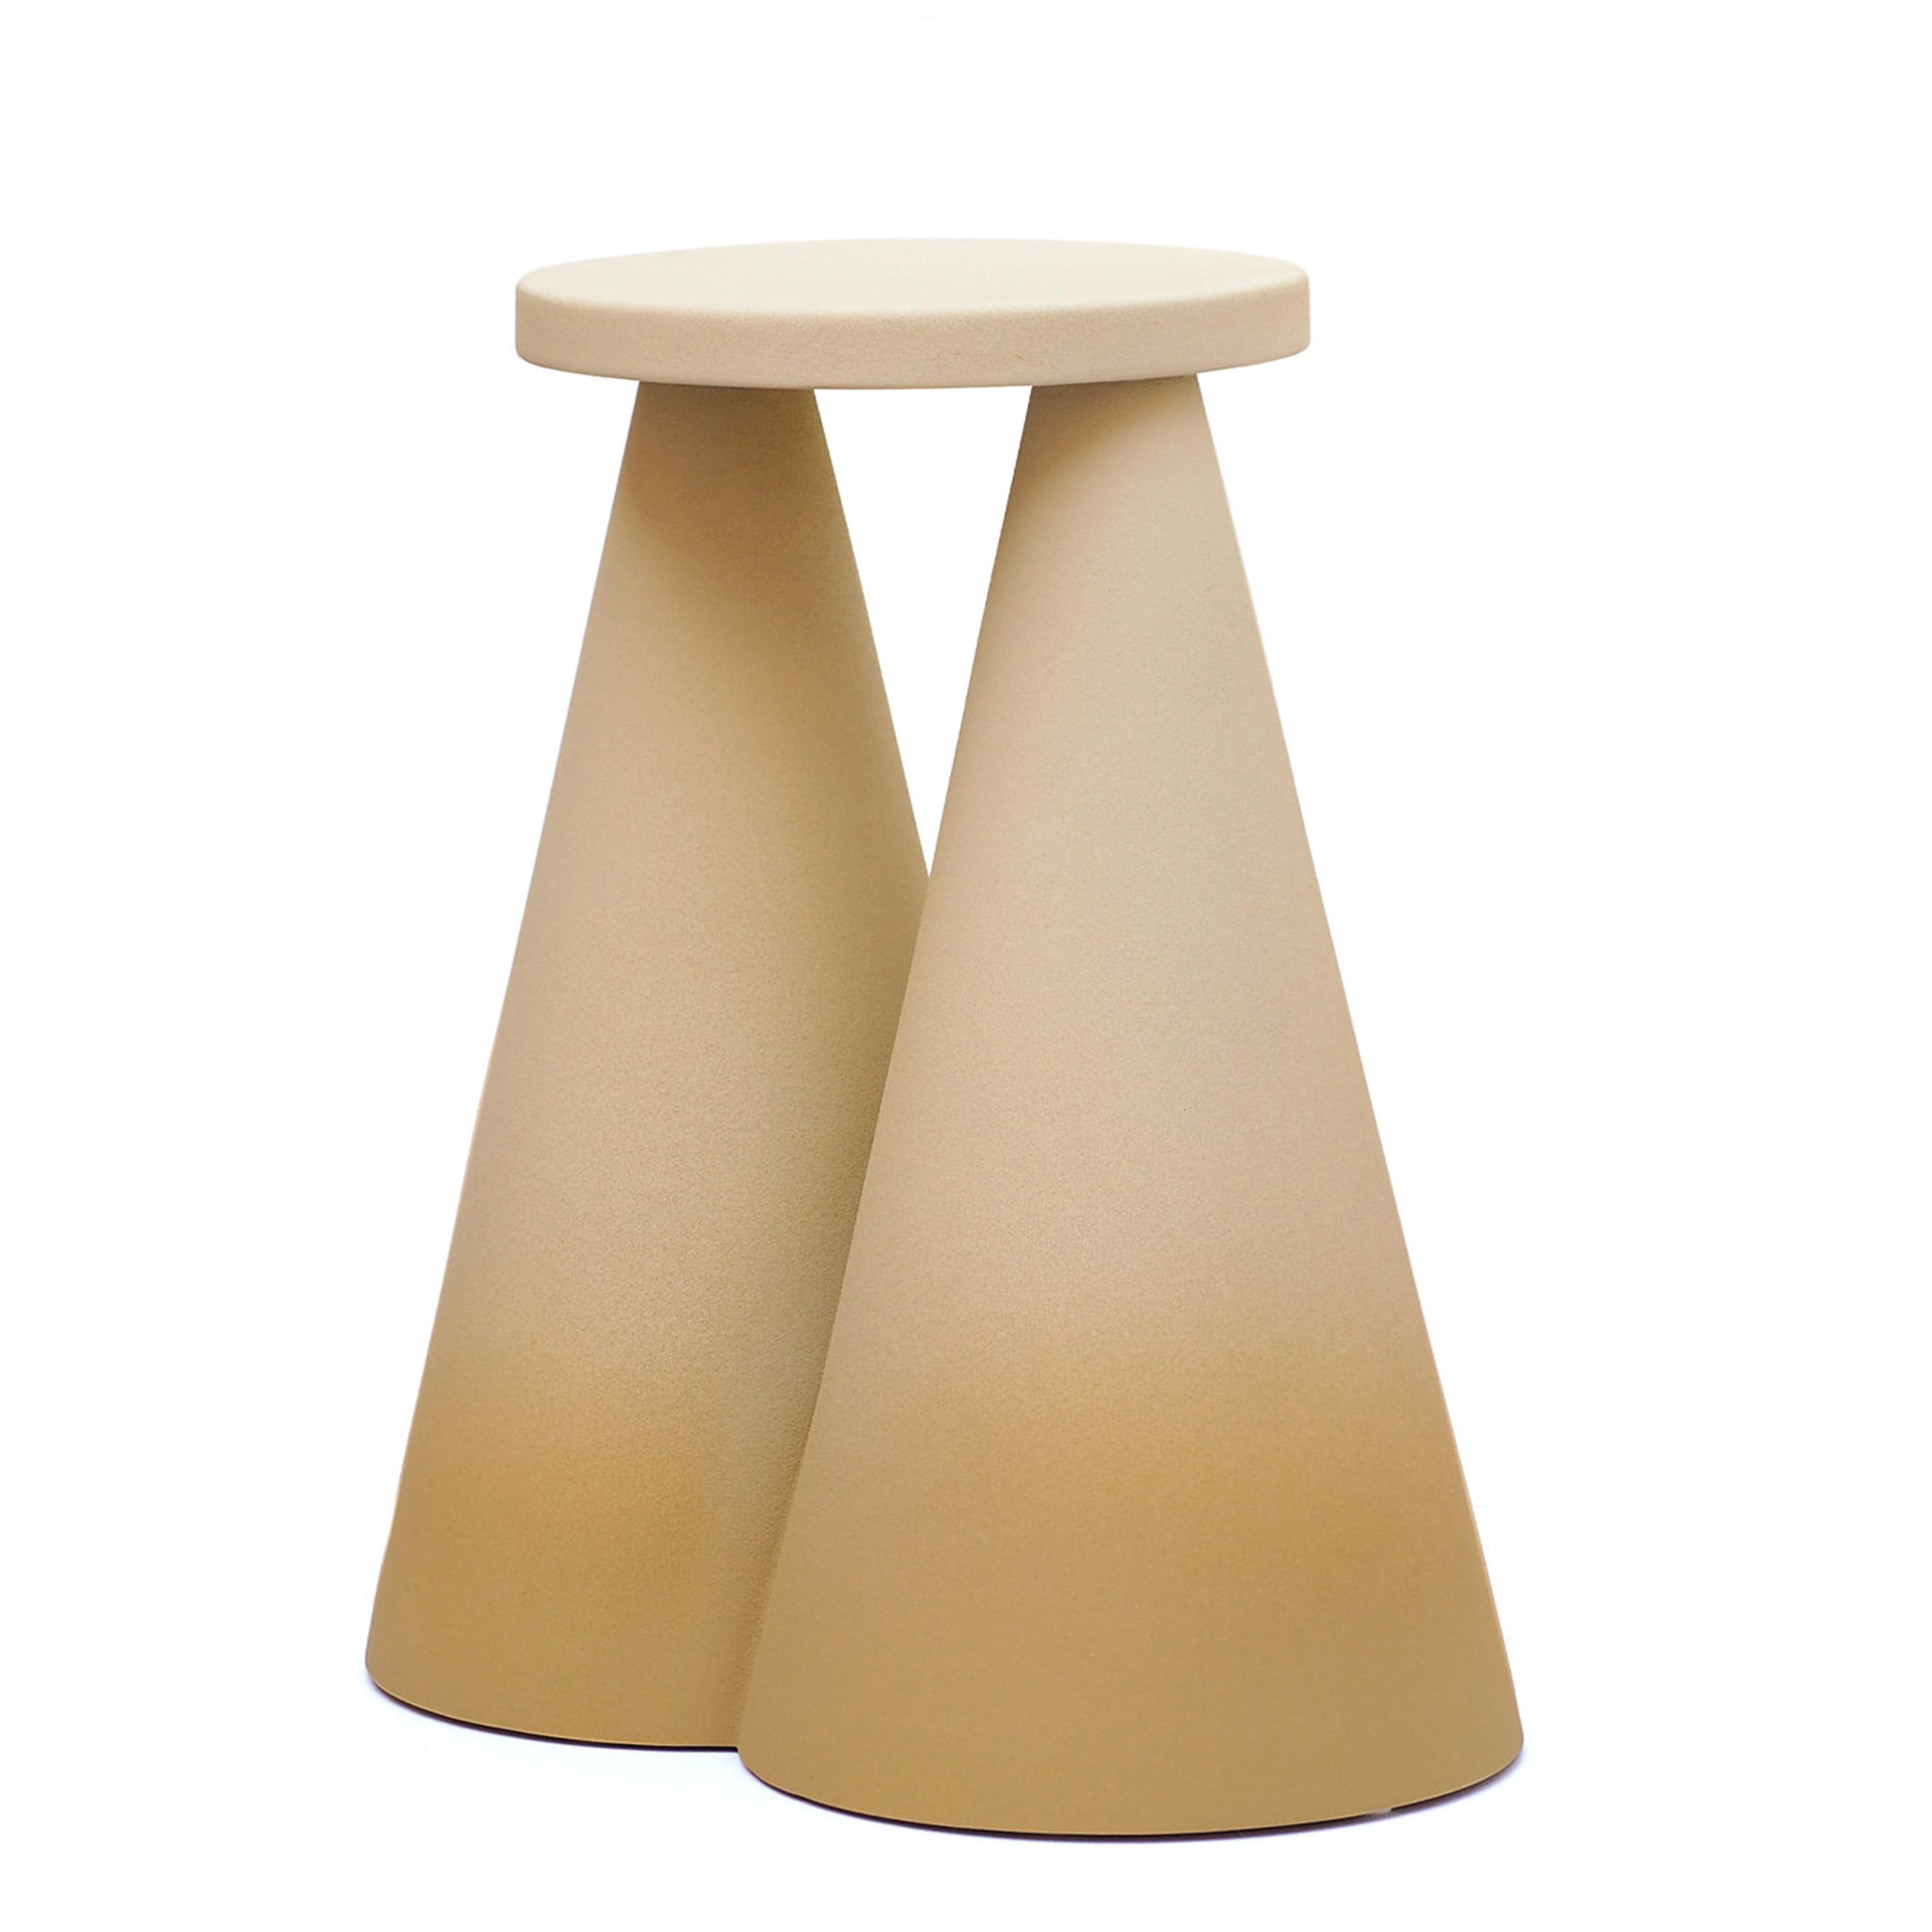 Isola Honey Ceramic Side Table by Cara/Davide  - Alternative view 3